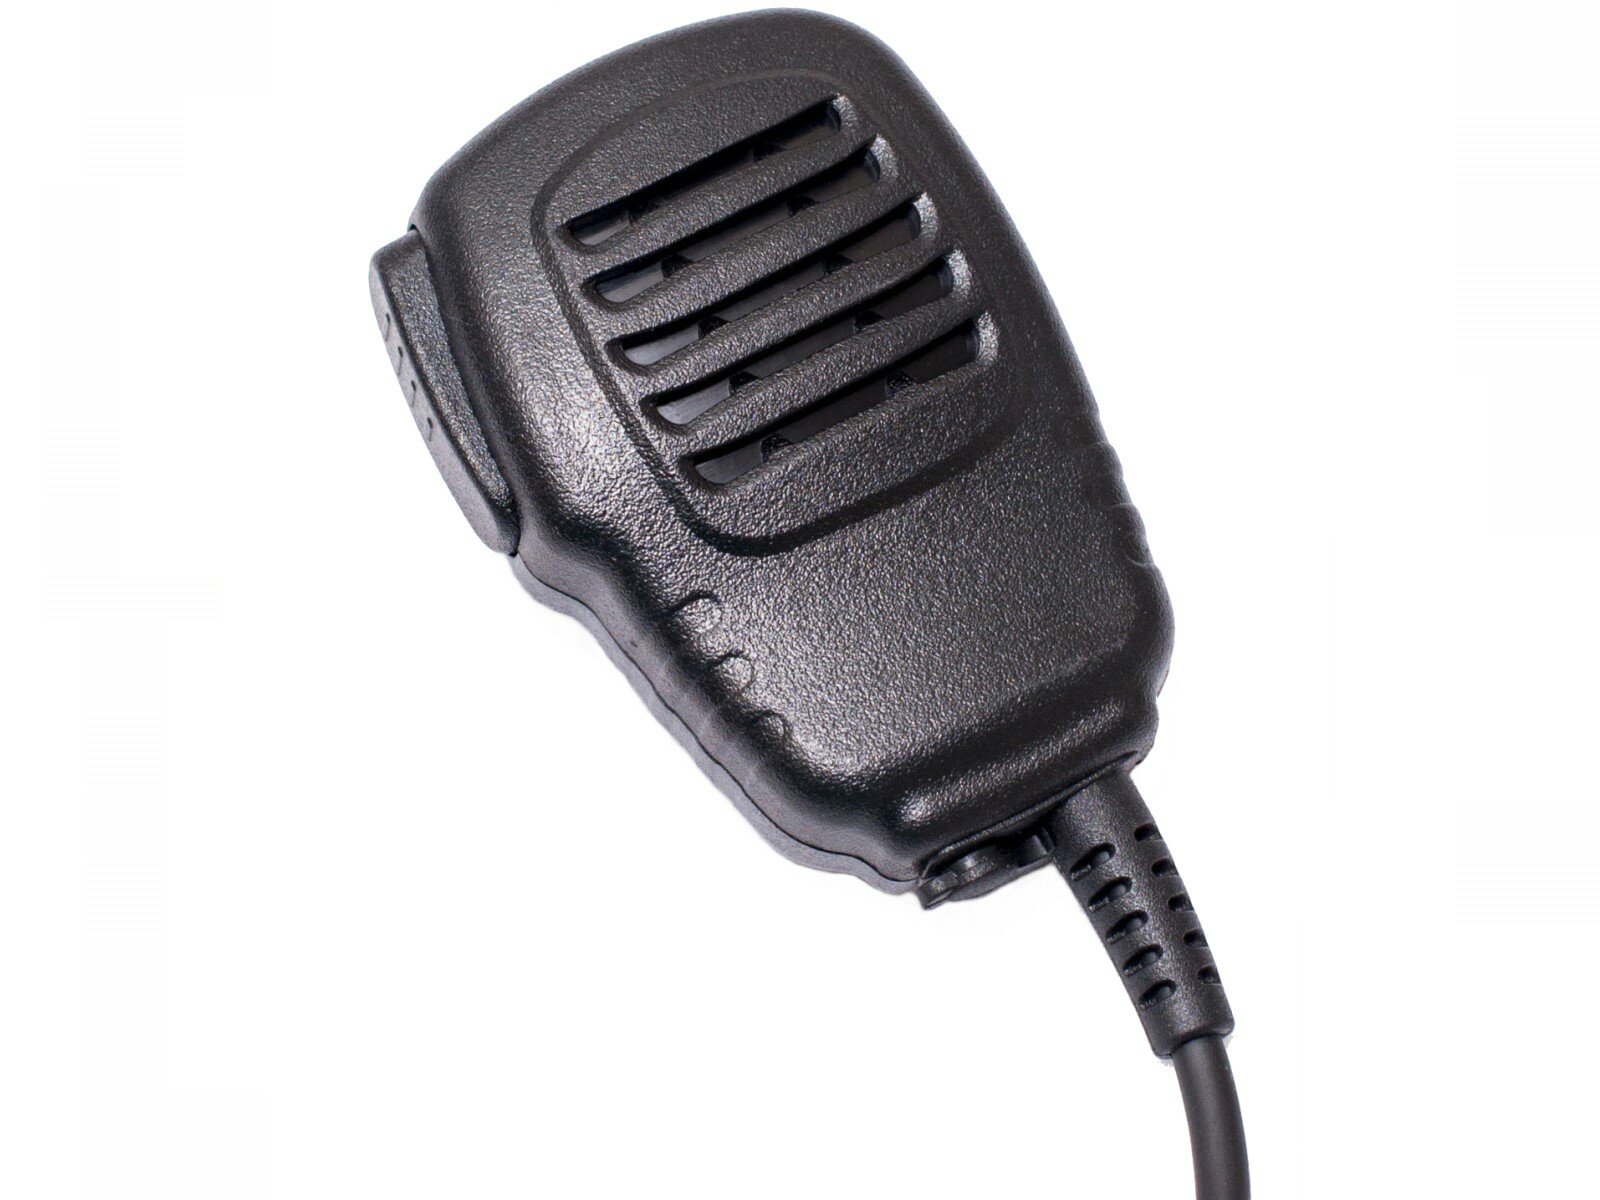 Inrico HMM-S100 Lautsprechermikrofon